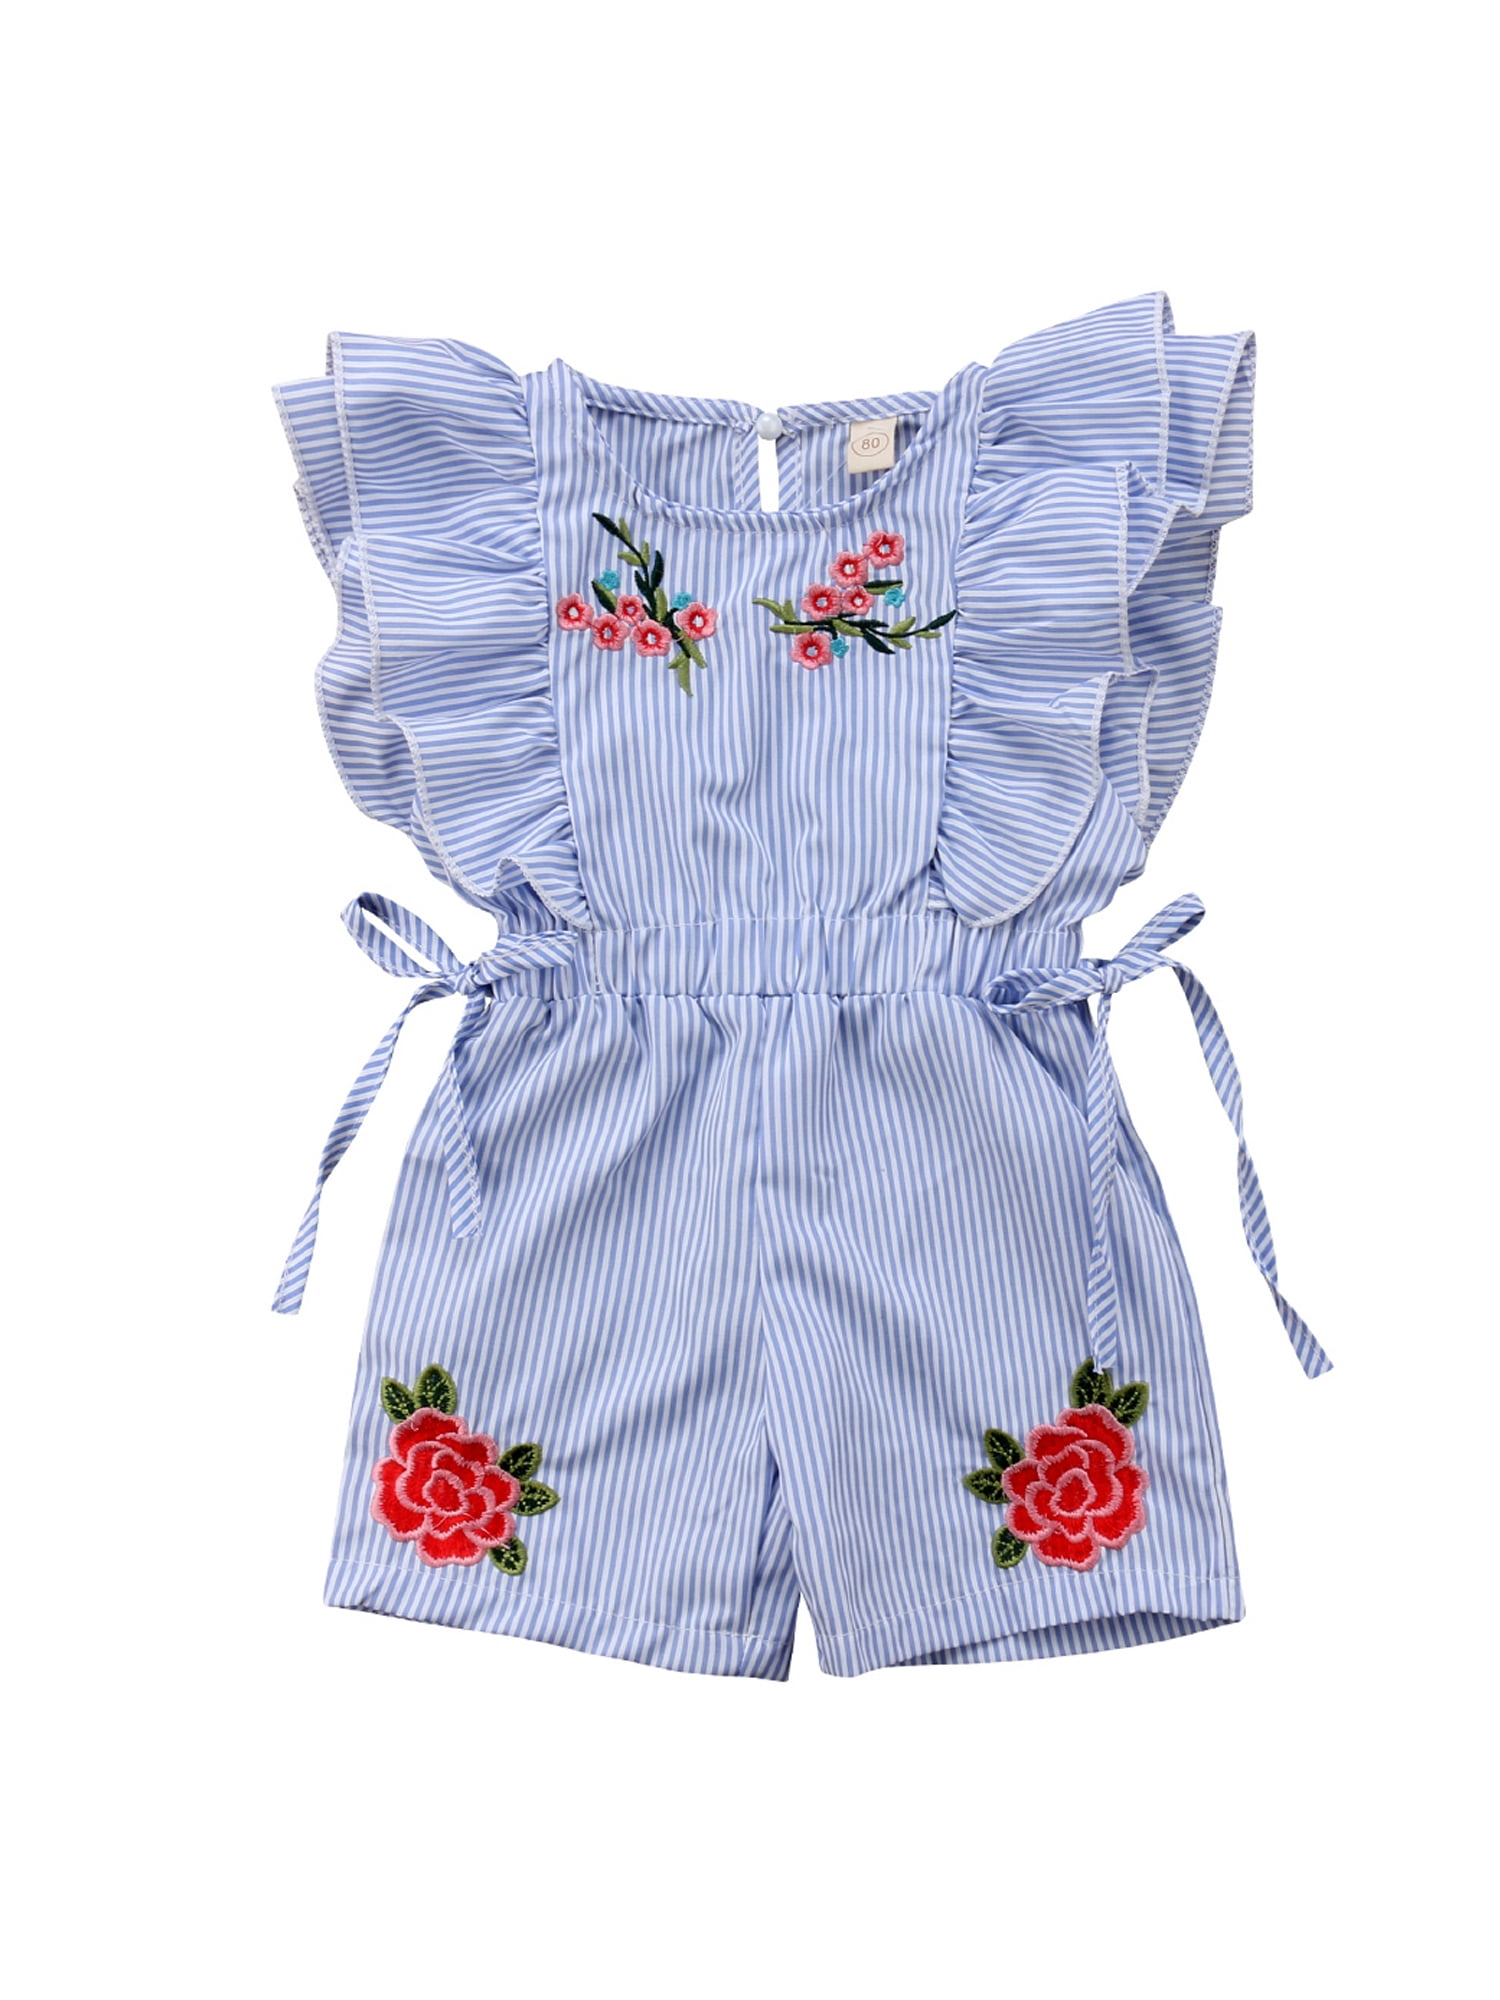 Baby Kid Girl Flower Embroidery Ruffle Romper Striped Summer Sweet Jumpsuit 